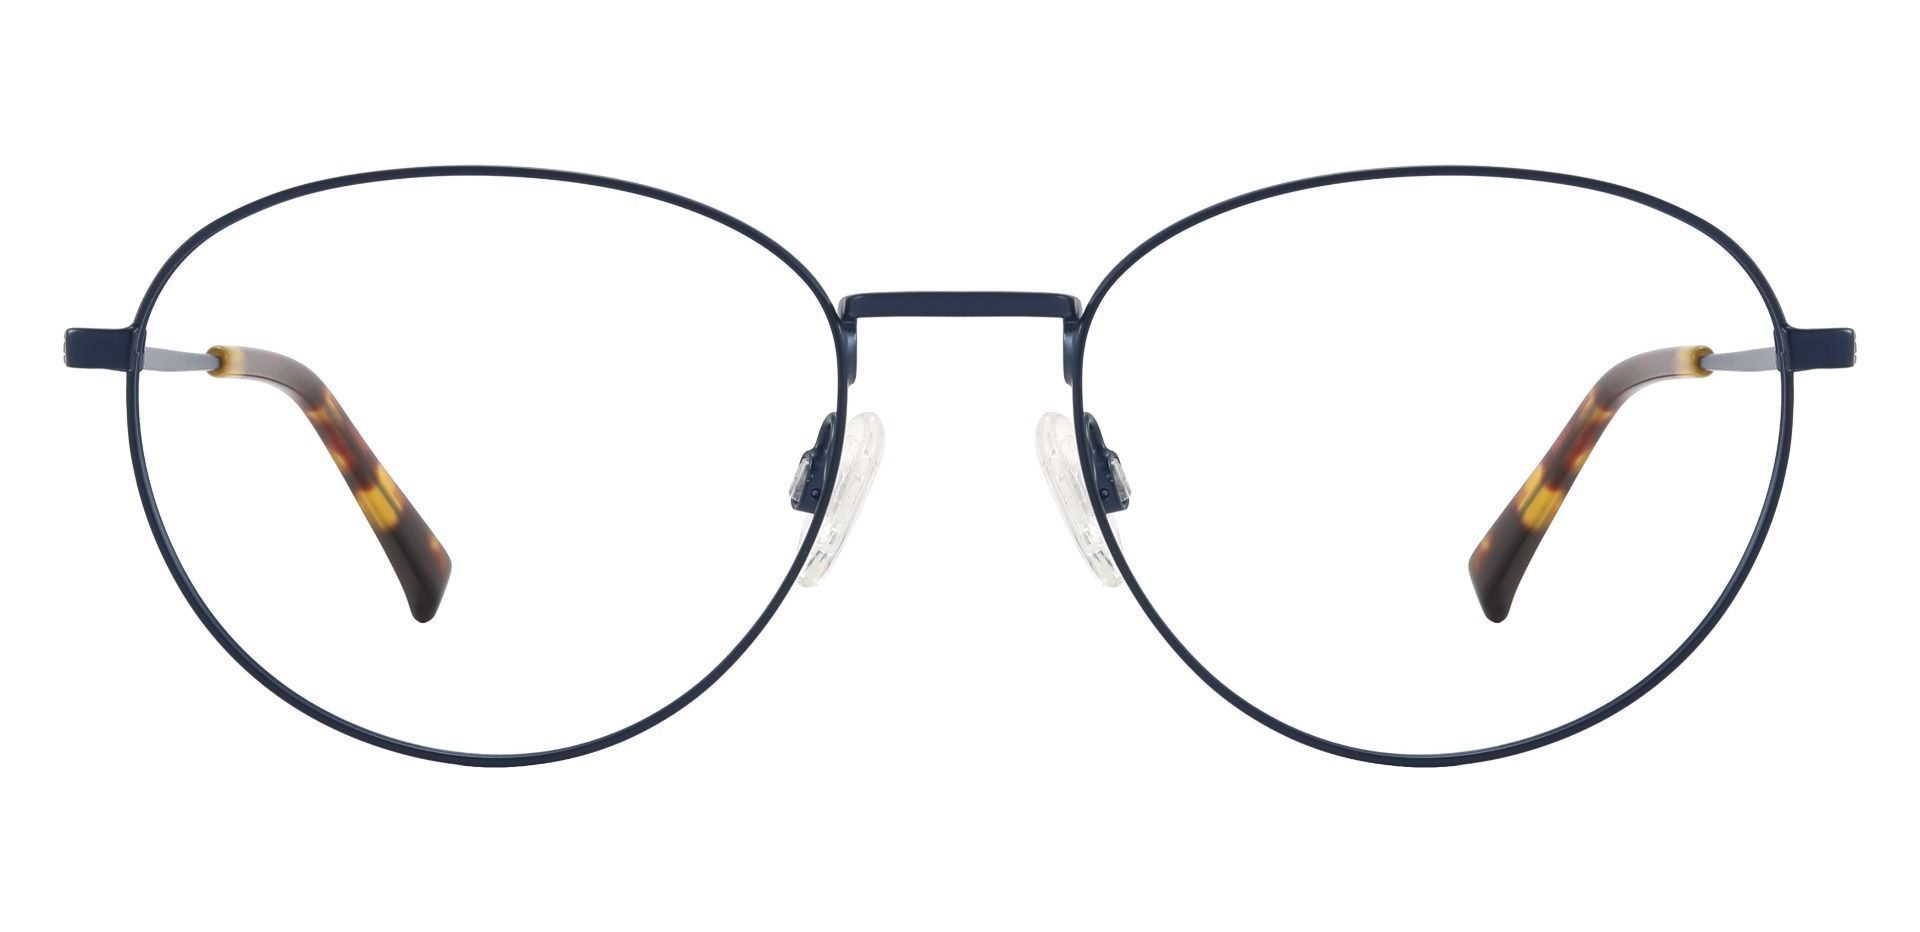 Elmira Oval Prescription Glasses - Blue